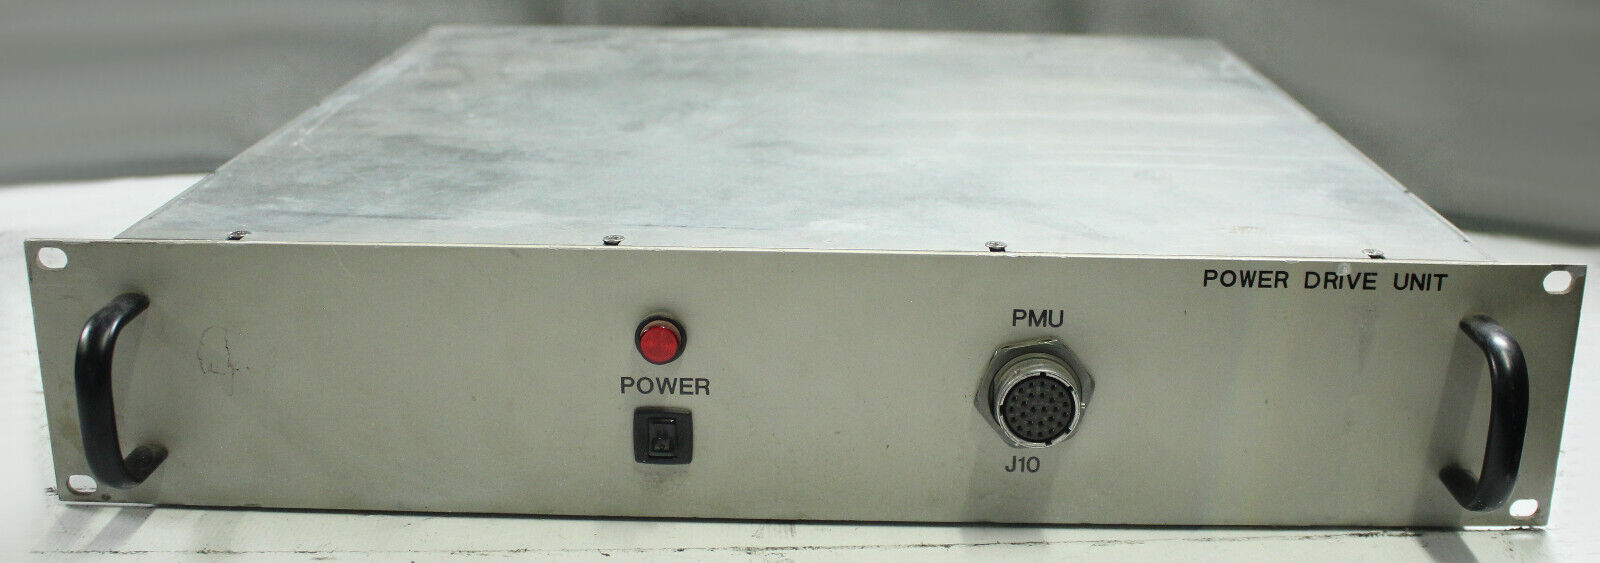 CPI Antenna Control System Power Drive Unit 123T 99-231-2000-01 0P0N7 C2817-01